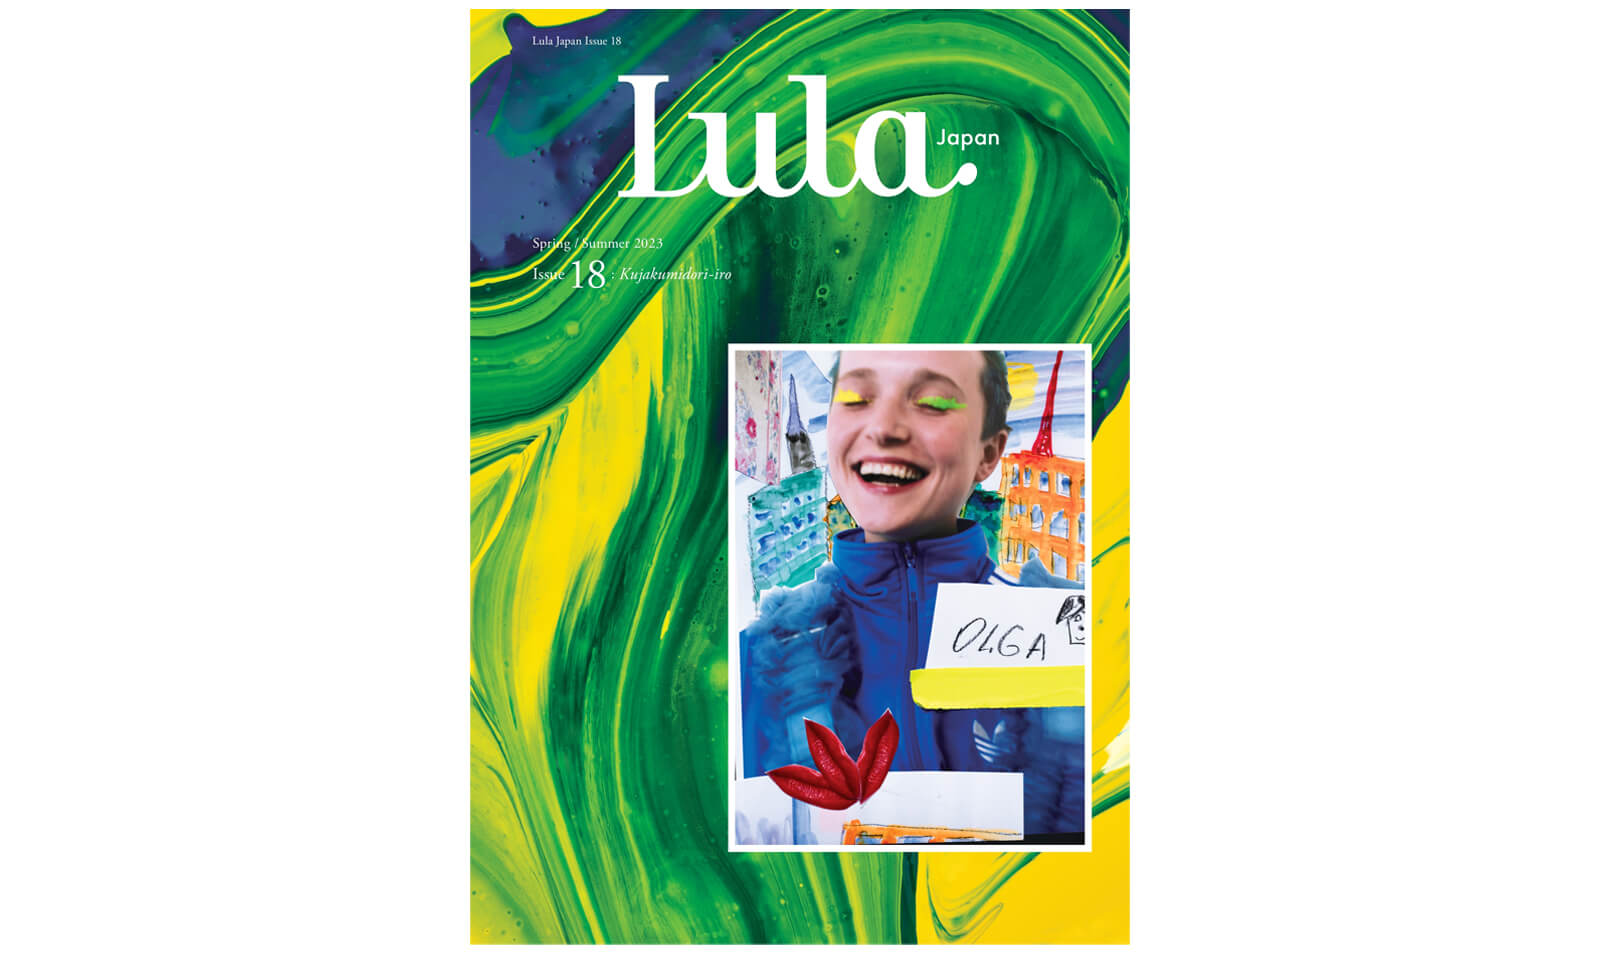 【SPECIAL】Lula Japan Issue 18 “kujakumidori-iro”